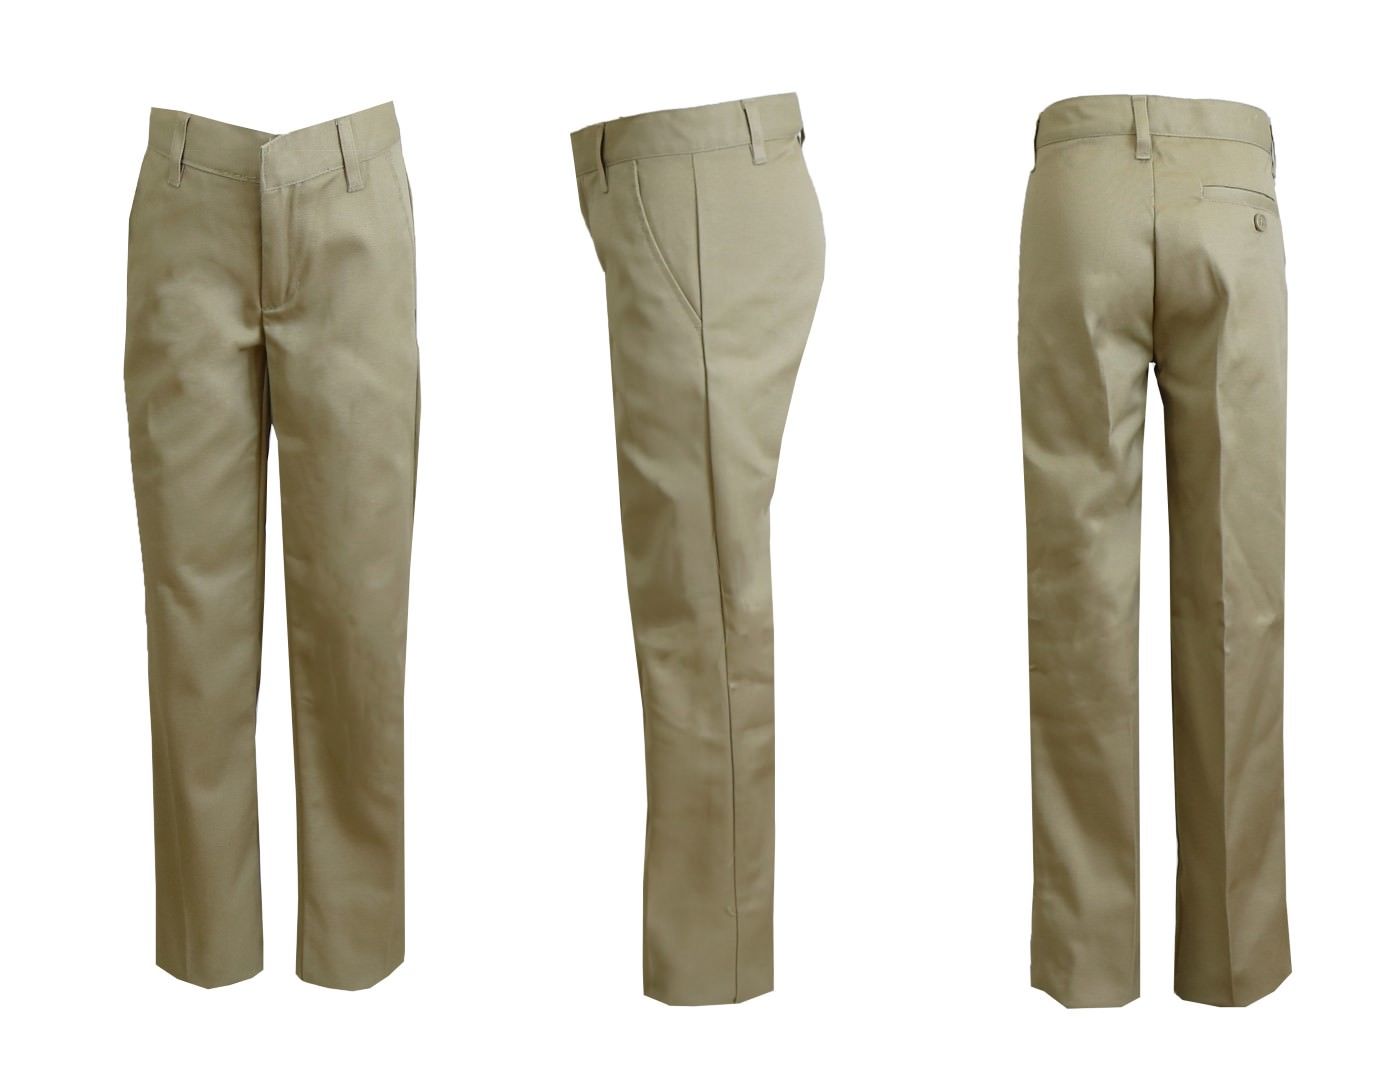 Mens Grey Flat Front Pants - The Uniform Store